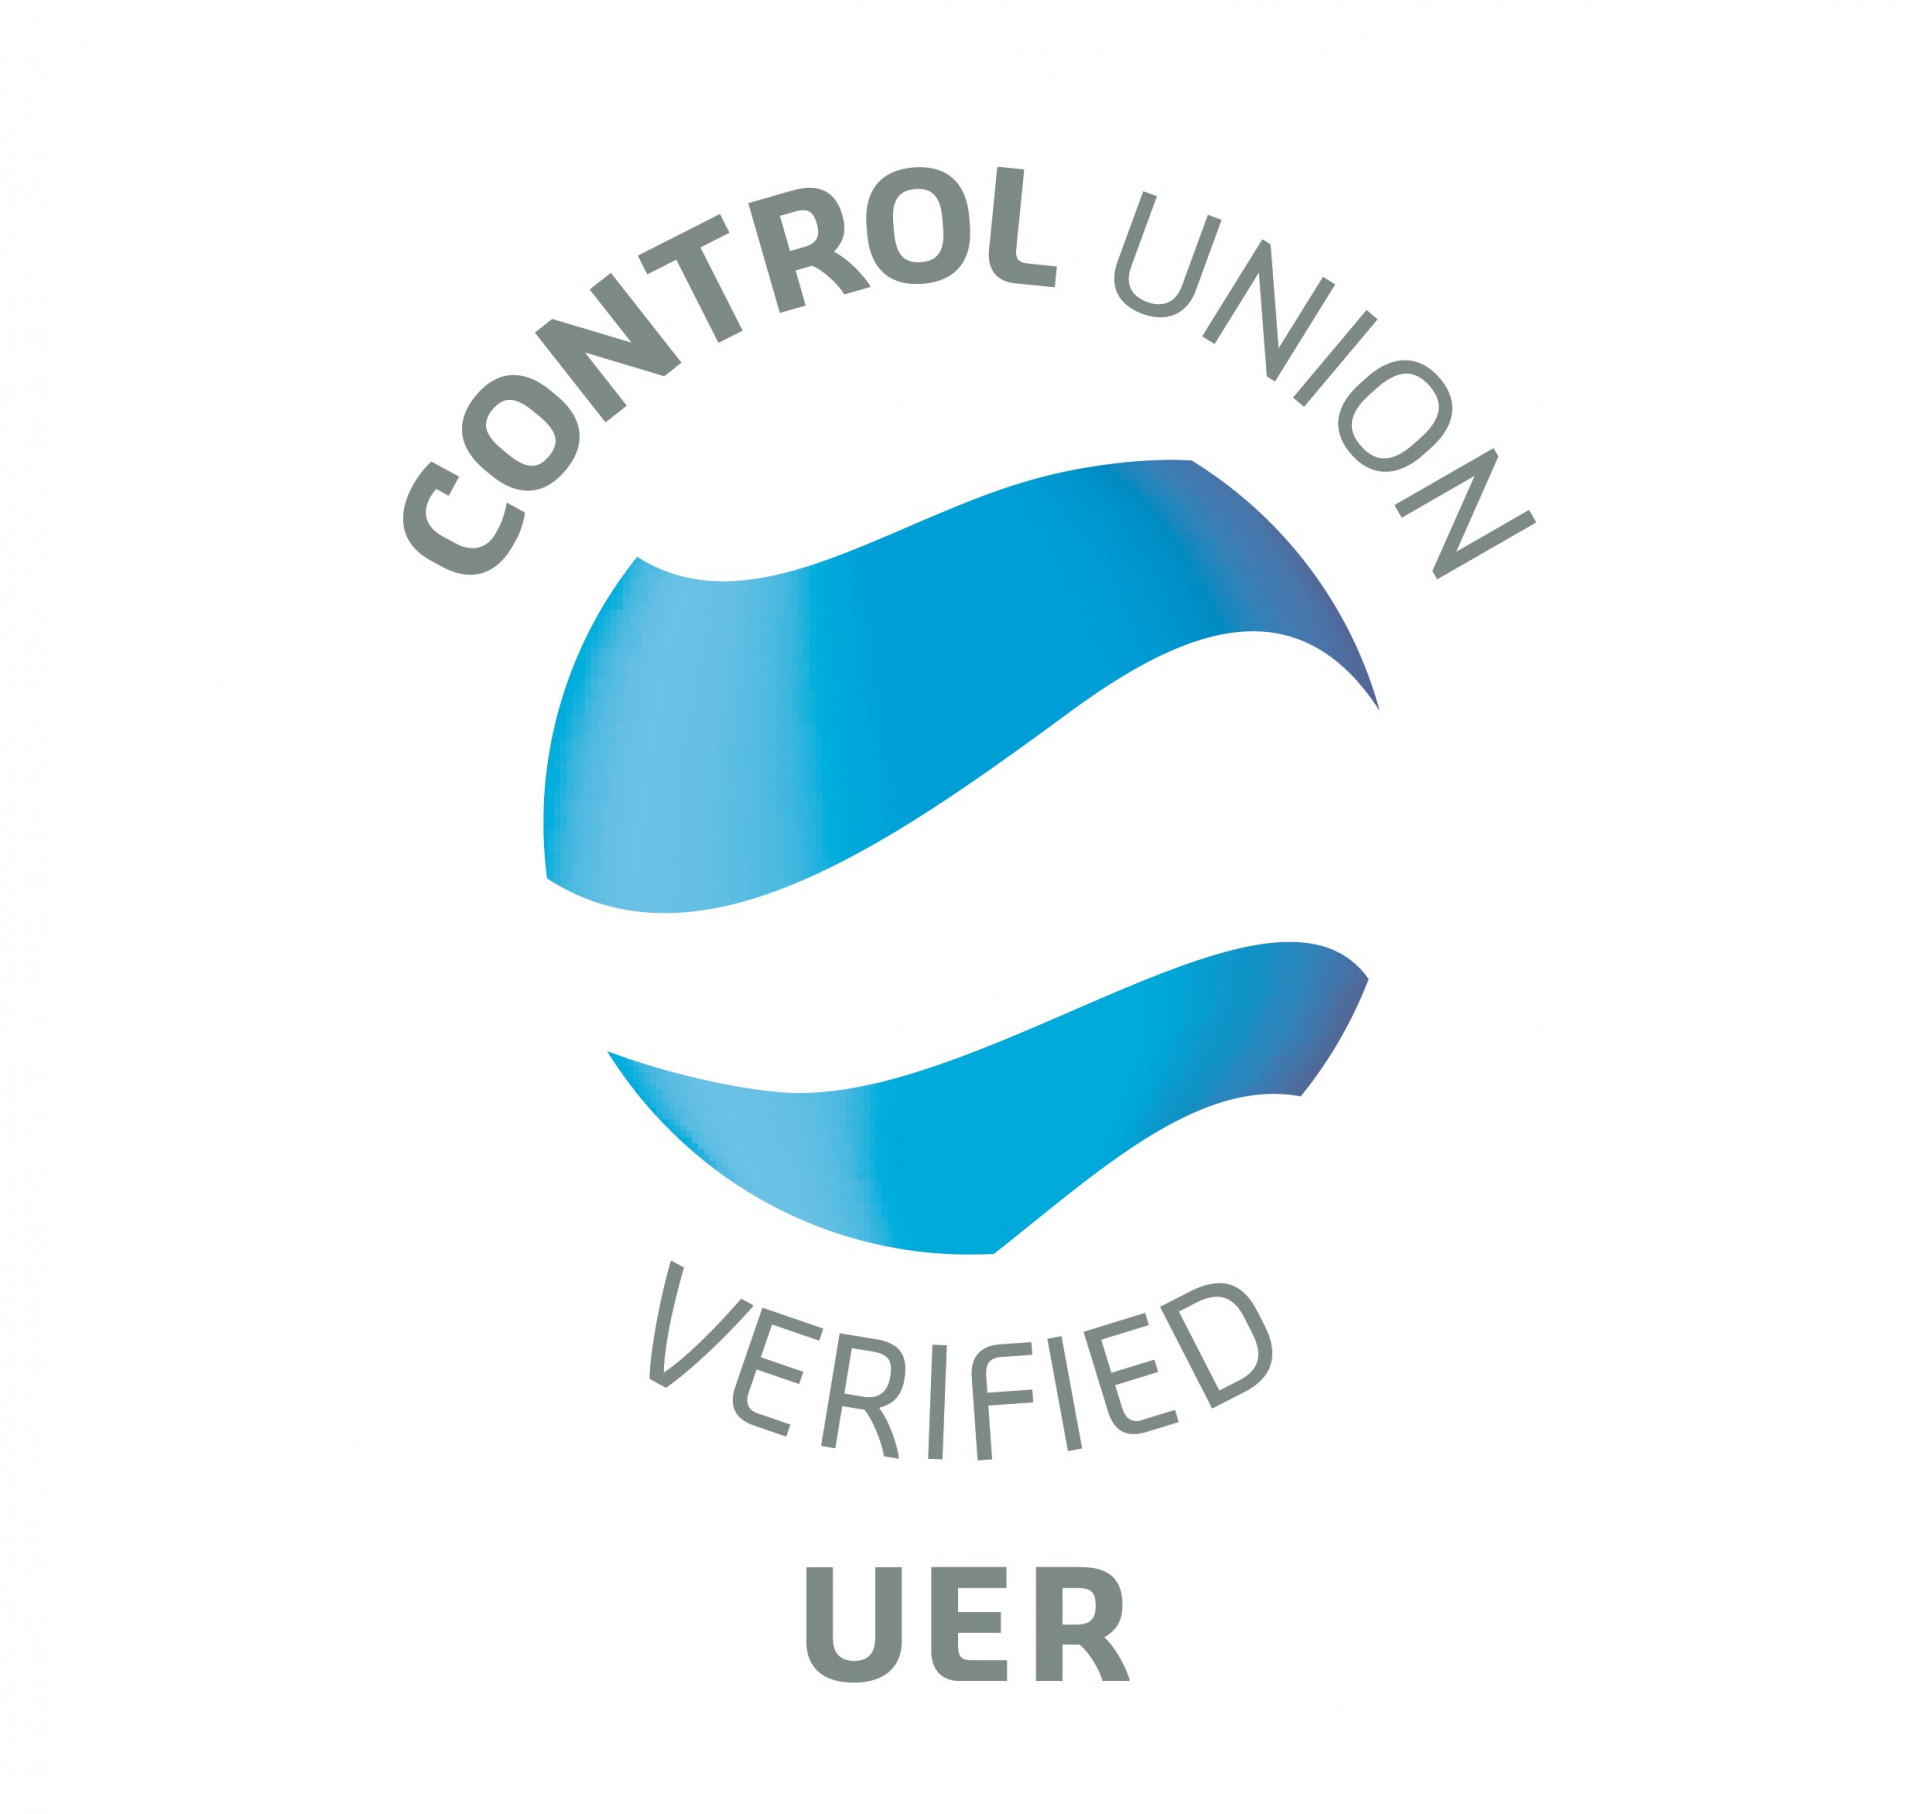 UER - Upstream Emission Reduction Verification